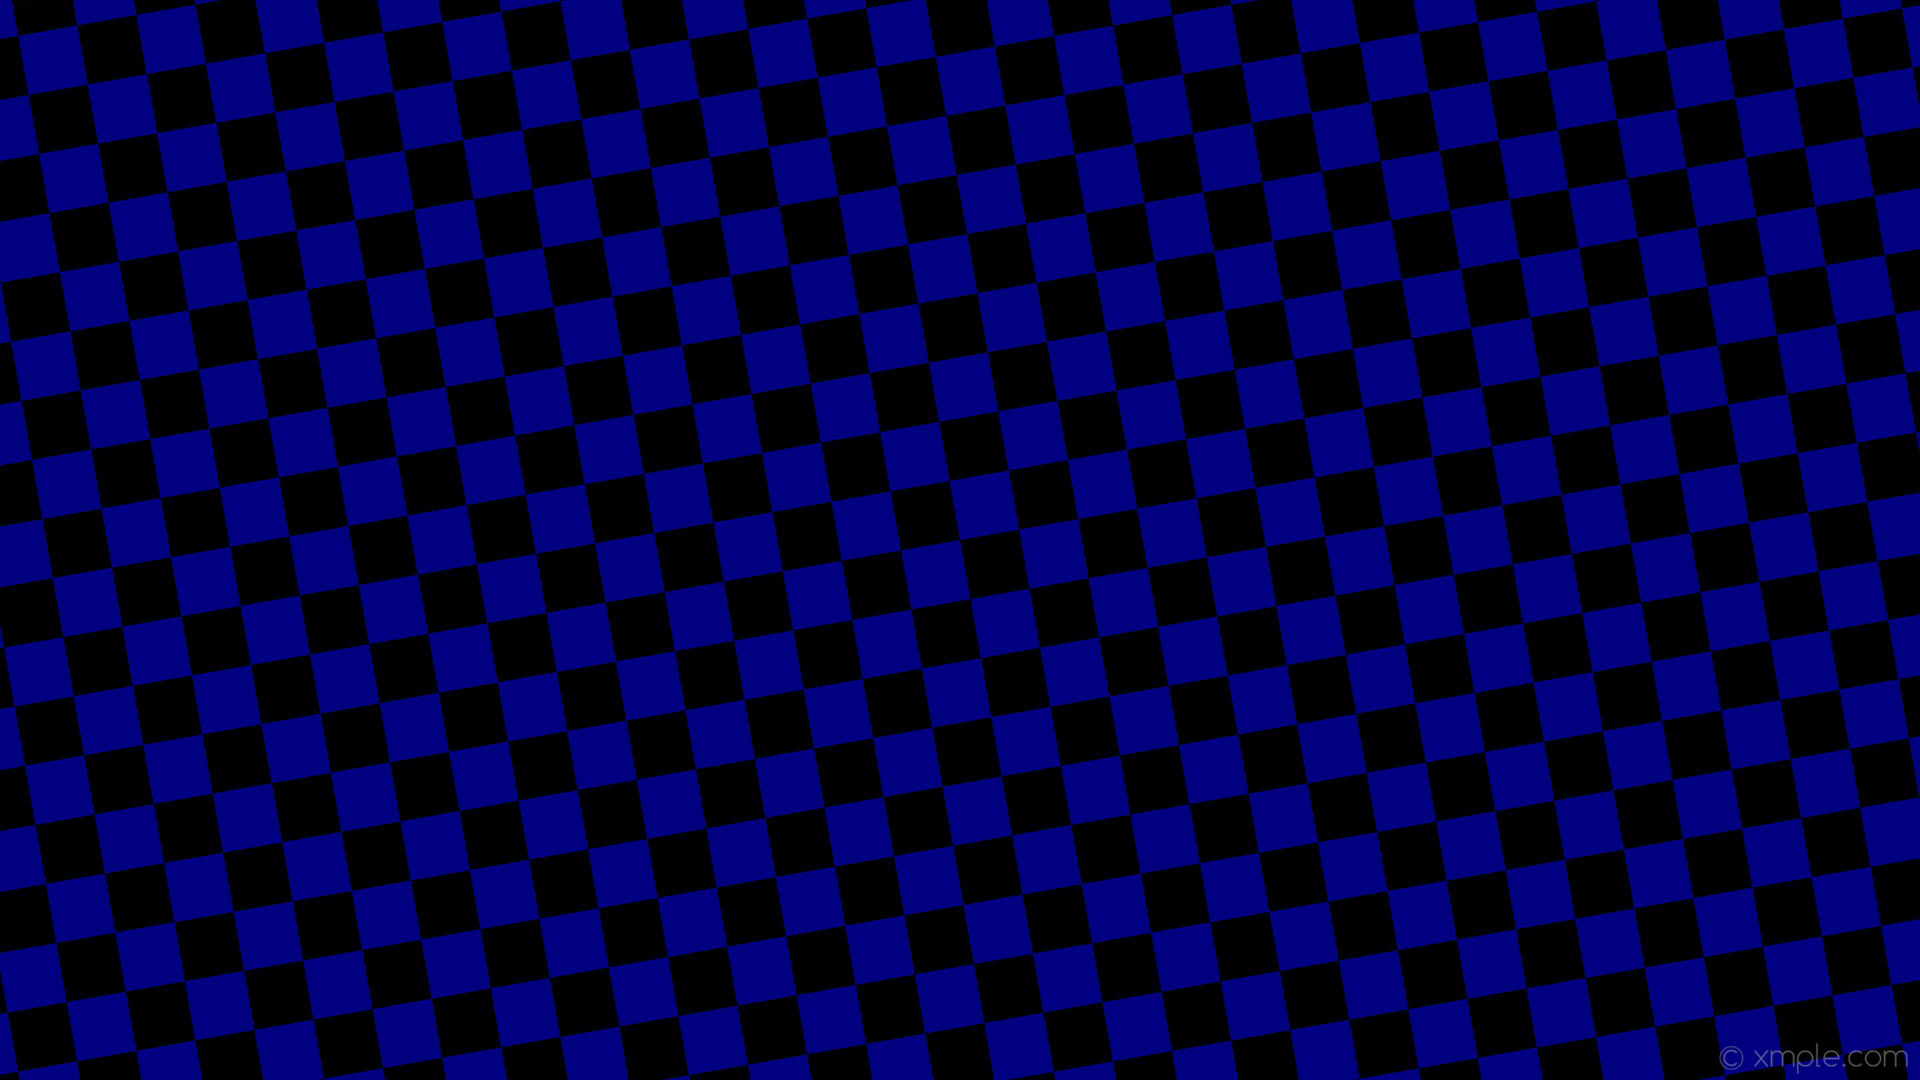 1920x1080 wallpaper checkered blue black squares navy #000000 #000080 diagonal 10Â°  60px